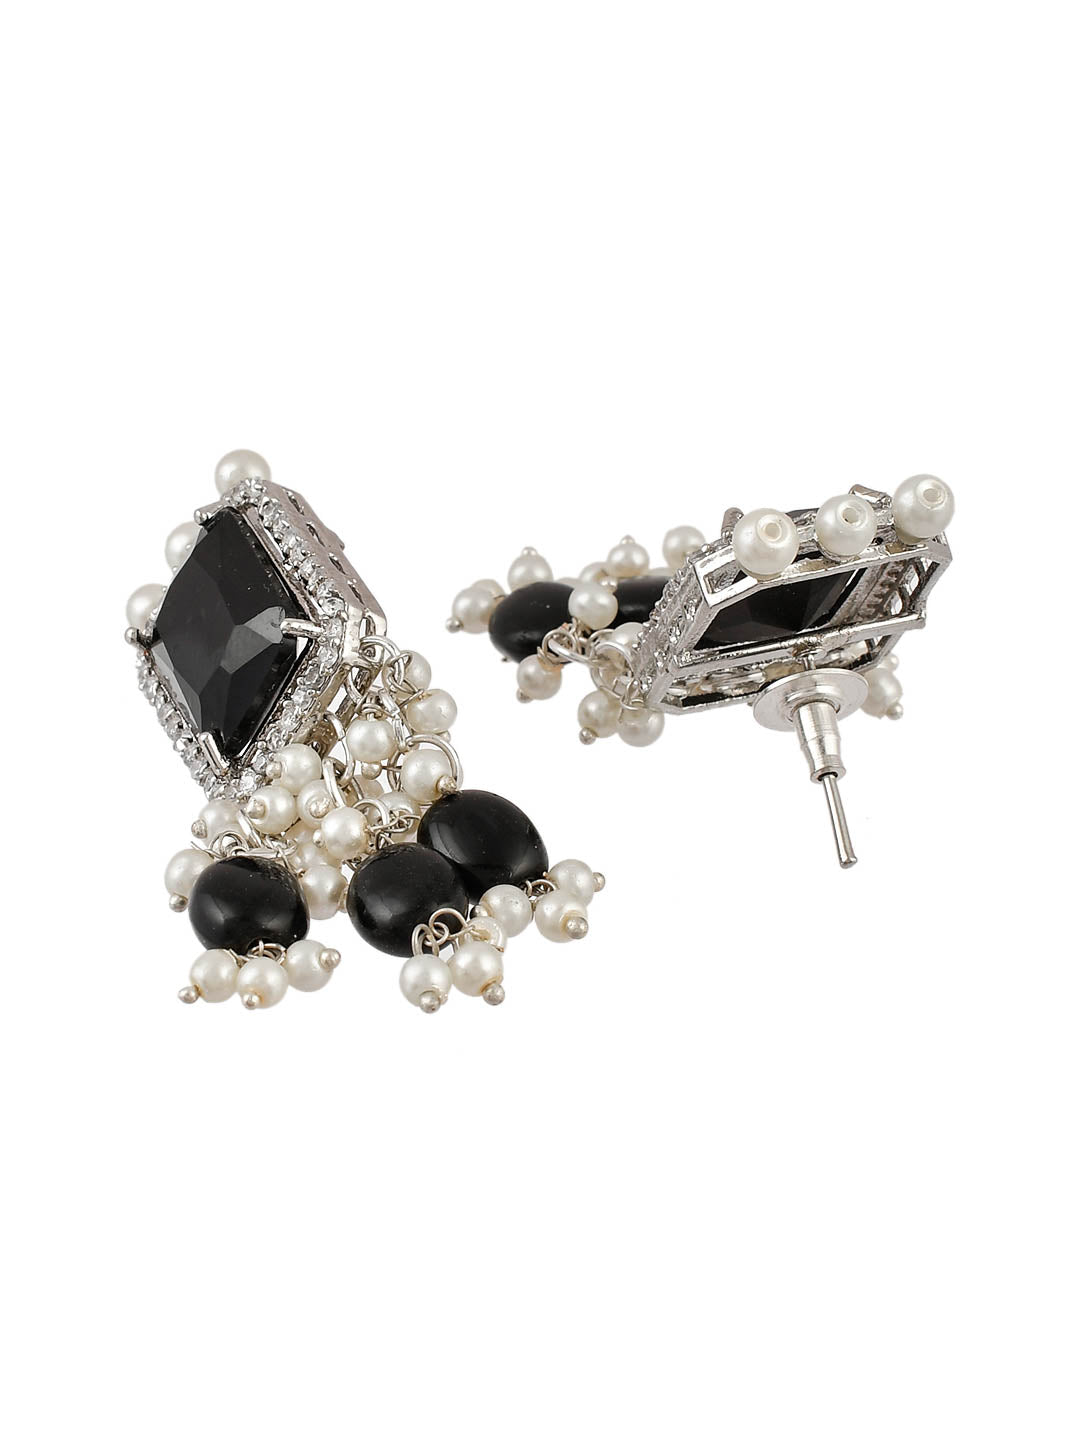 Kundan Black Stone Necklace earrings ring bracelet combo set | Fusion Vogue